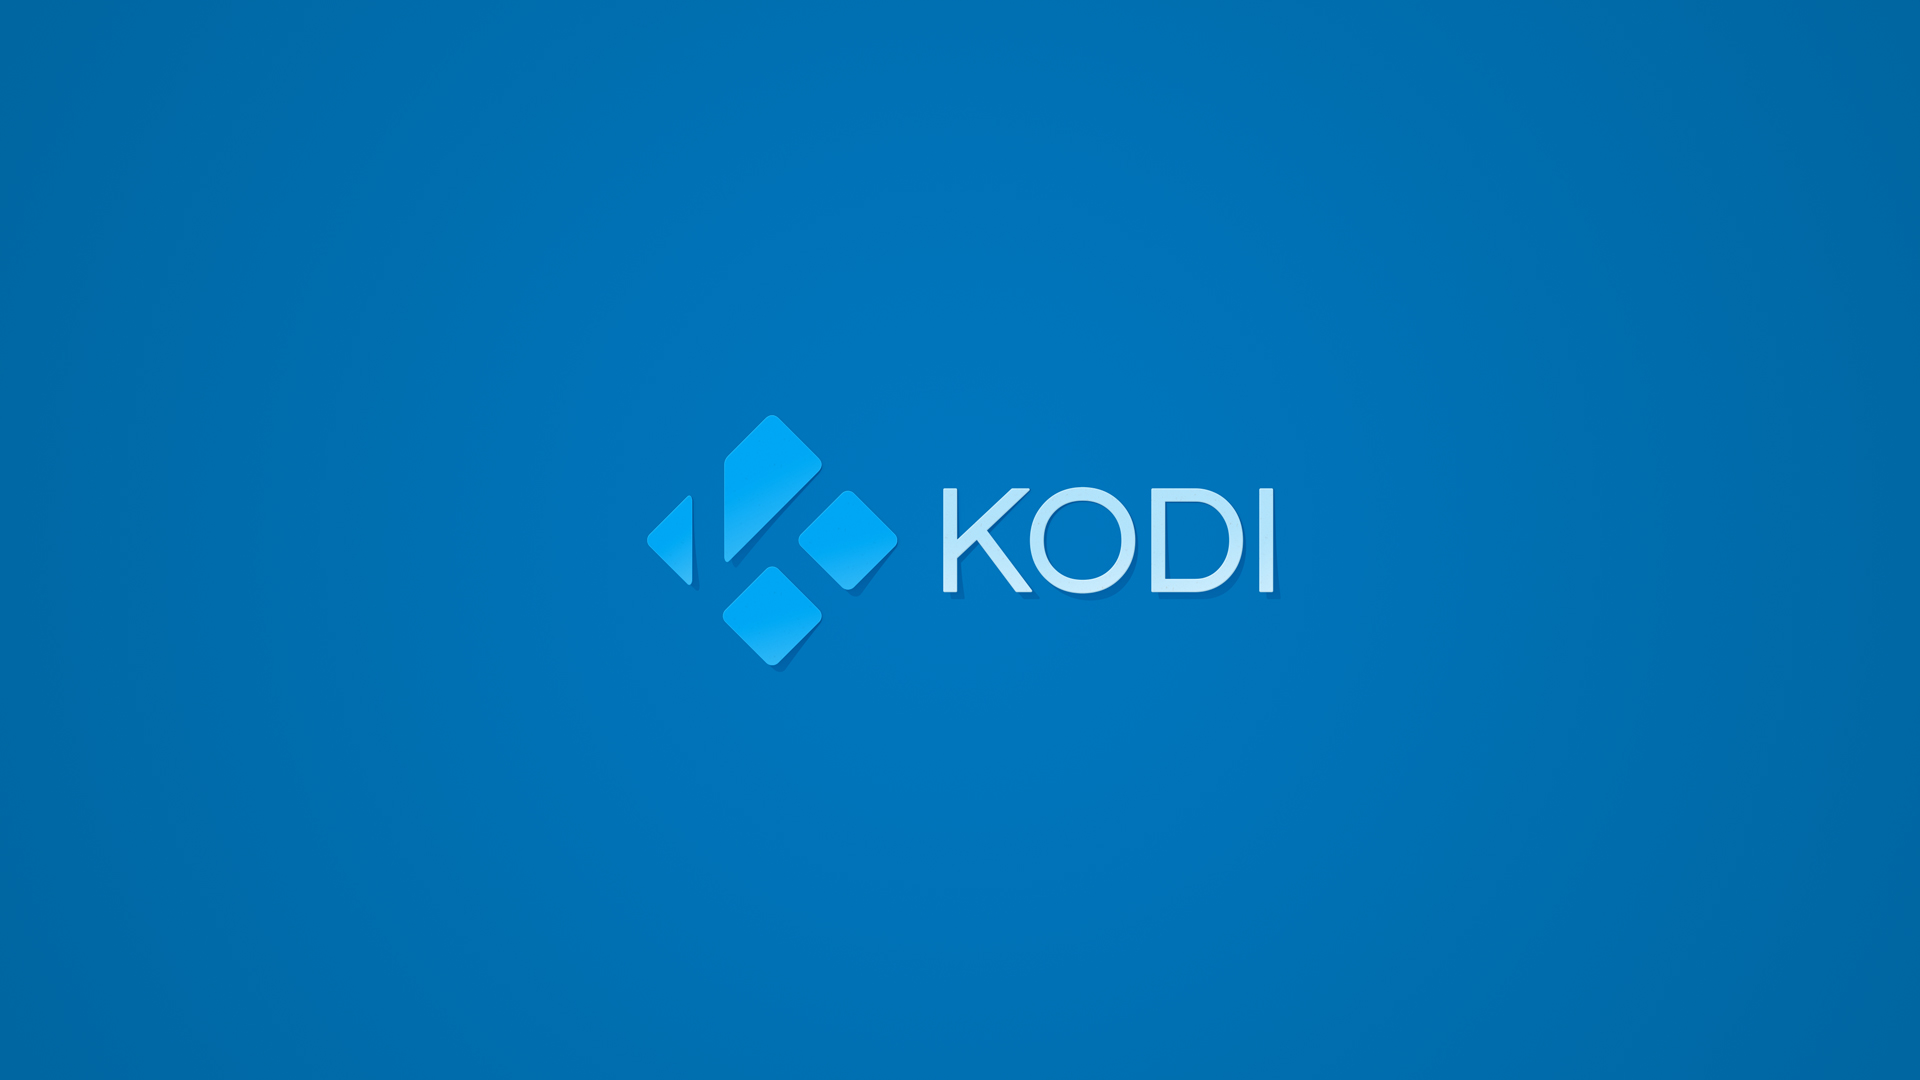 Kodi is not a piracy tool